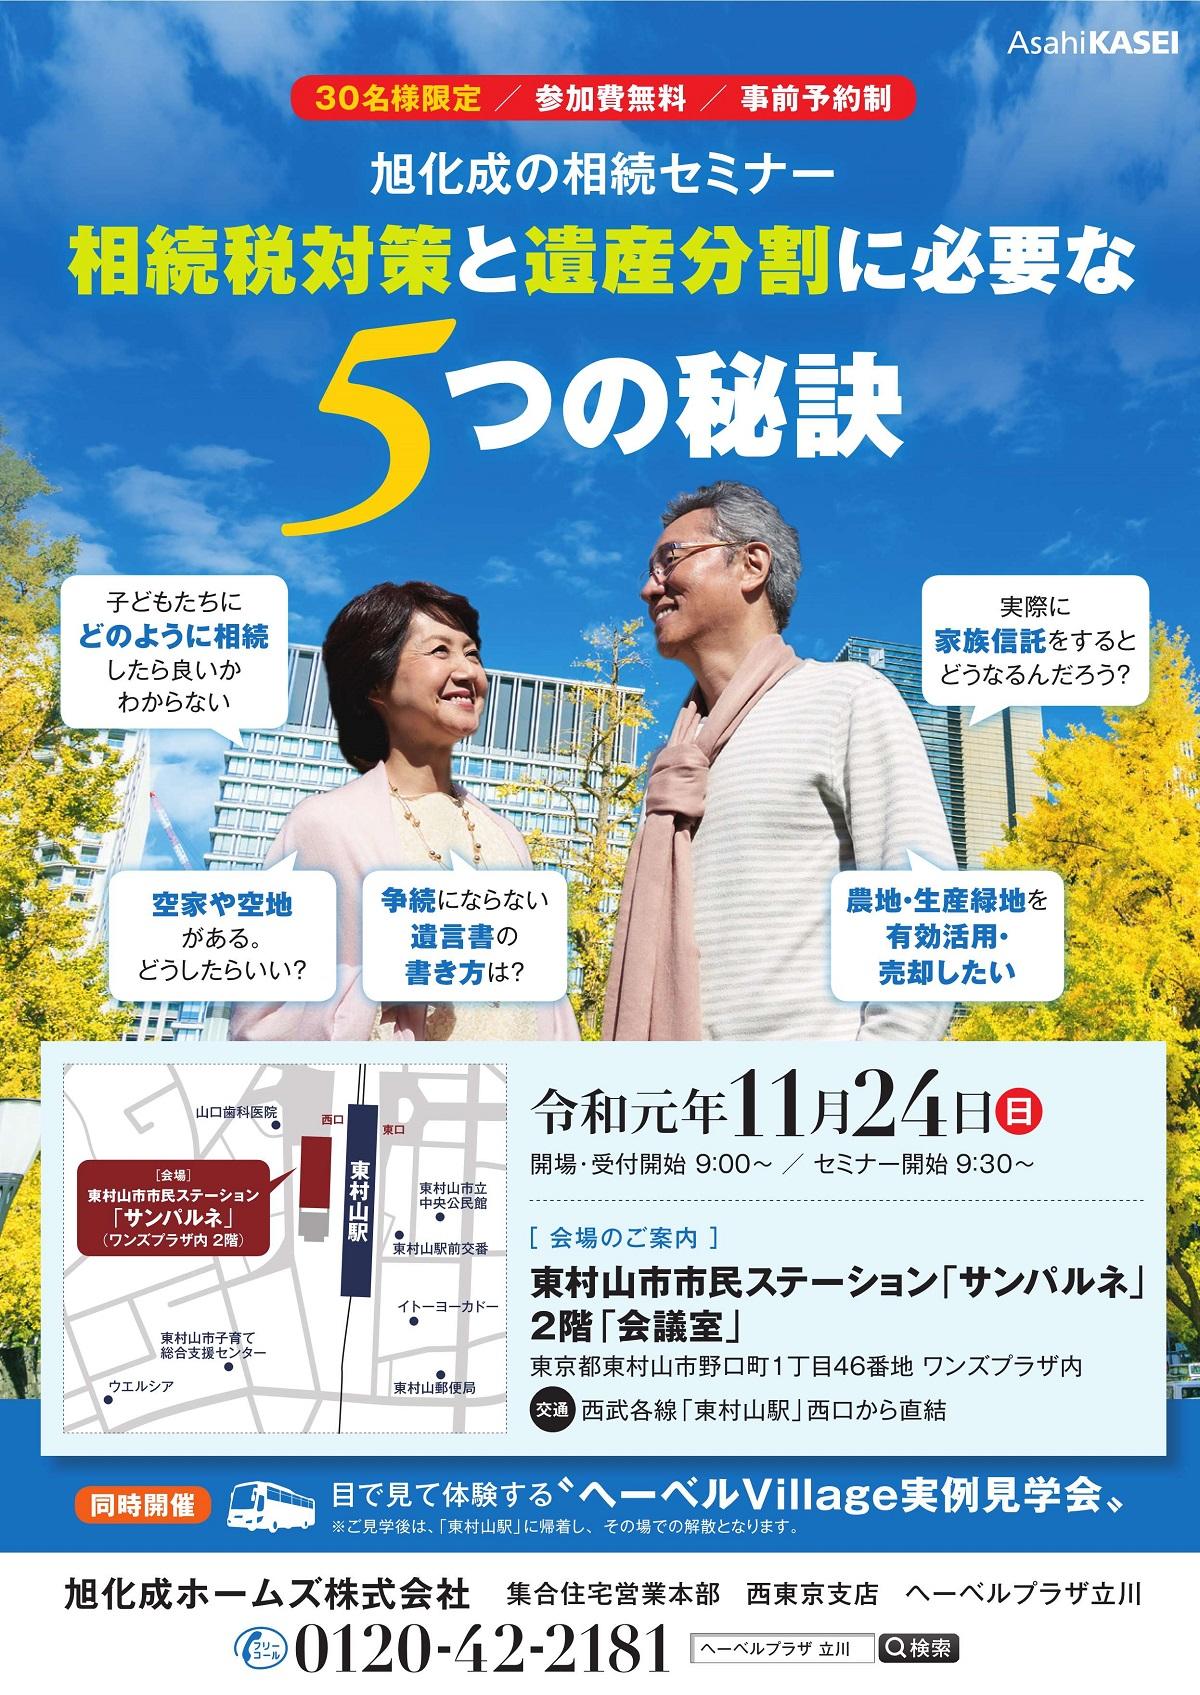 https://www.asahi-kasei.co.jp/maison/hebelplaza/blog/18/tachikawa/item/2019/191114_1.jpg